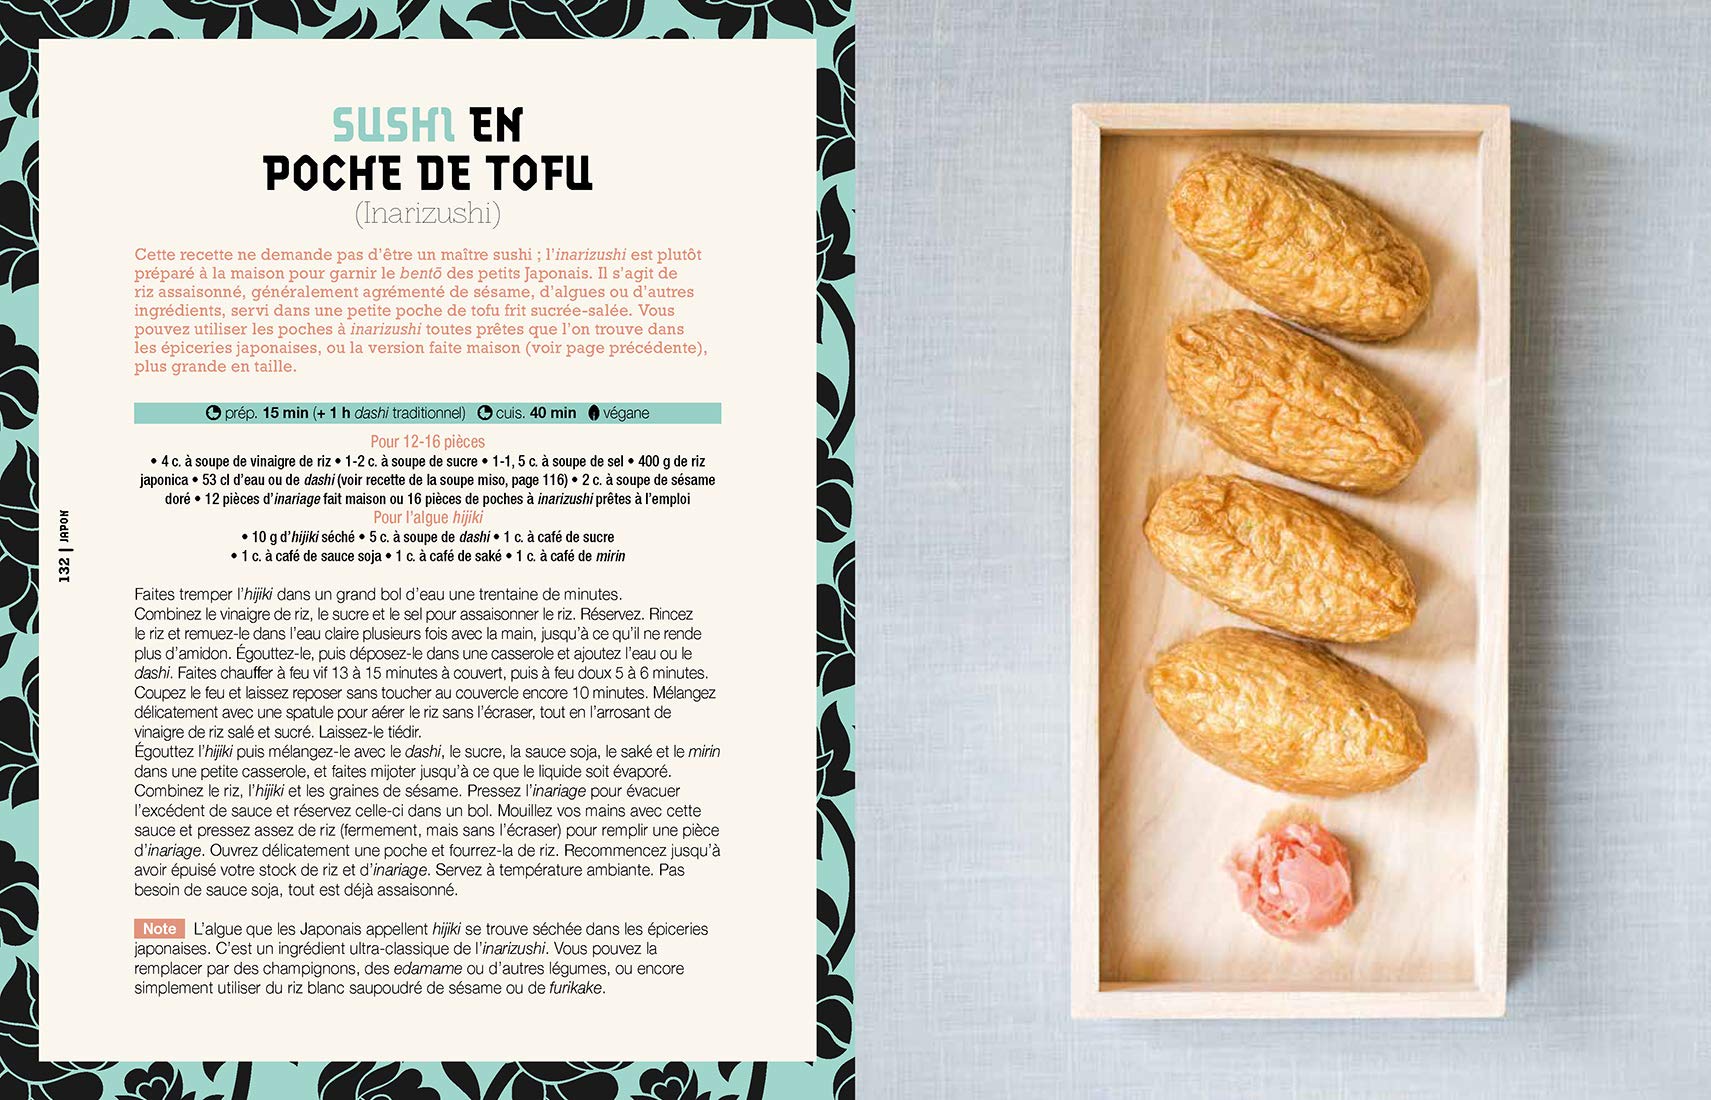 Tofu Editions La Plage: Inside Page